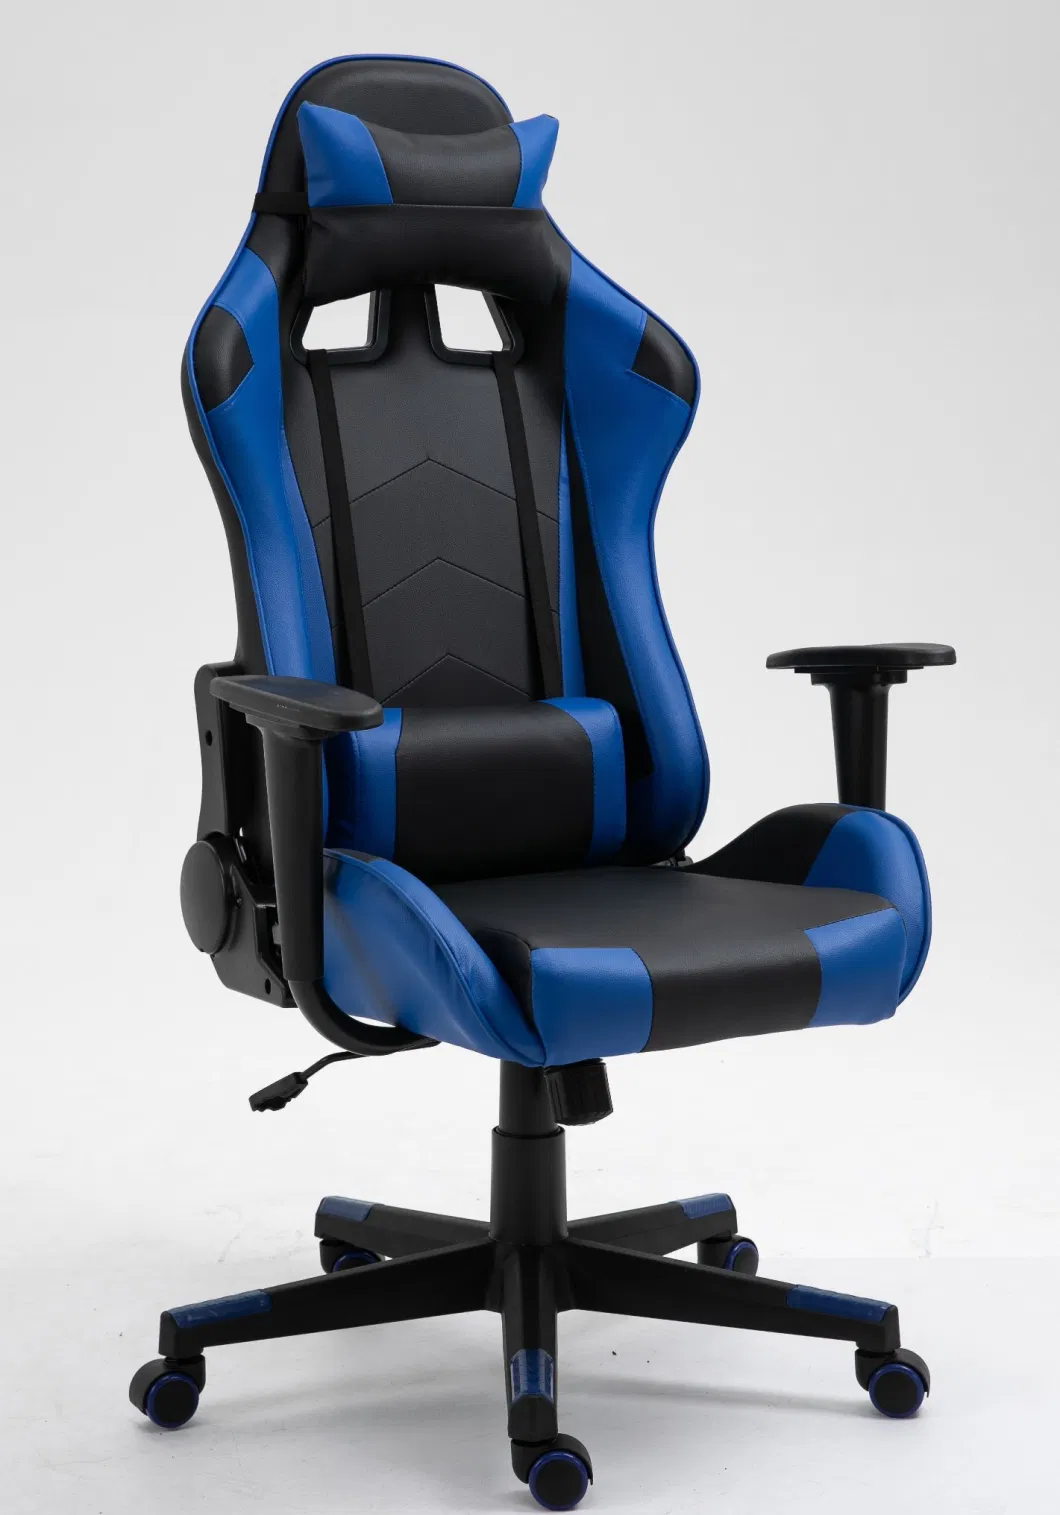 Orange Gaming Chair Nice Price Anji Factory Ergonomics Sillas Chair Racing Chair Office Chair